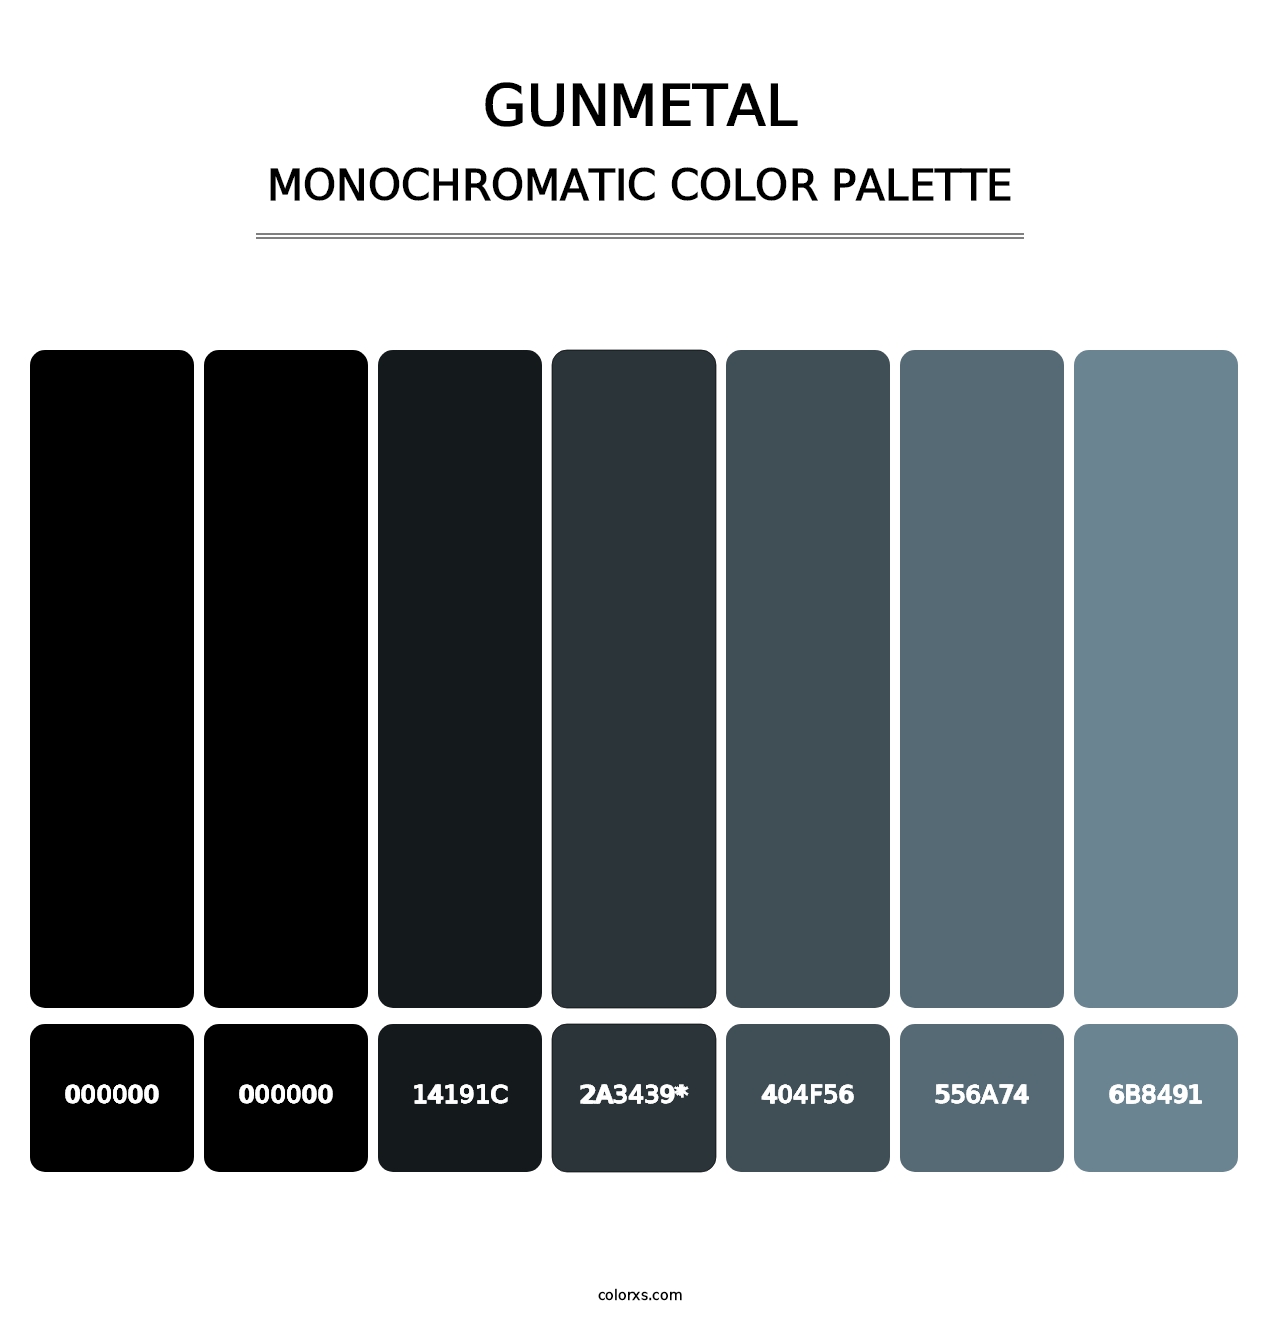 Gunmetal - Monochromatic Color Palette